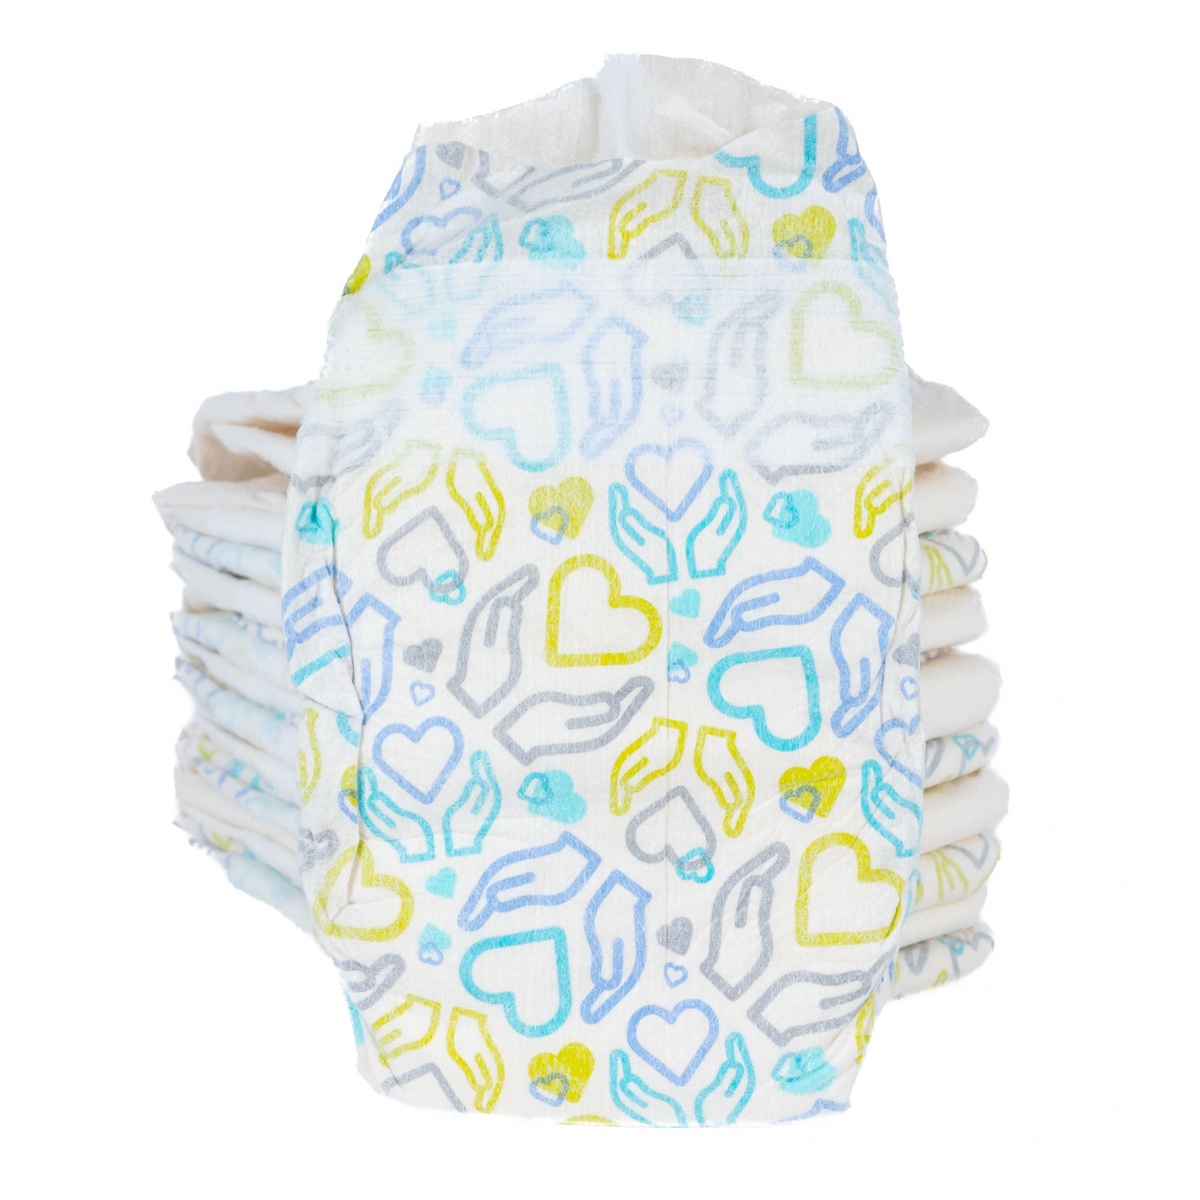 seventh generation sensitive protection disposable diaper review